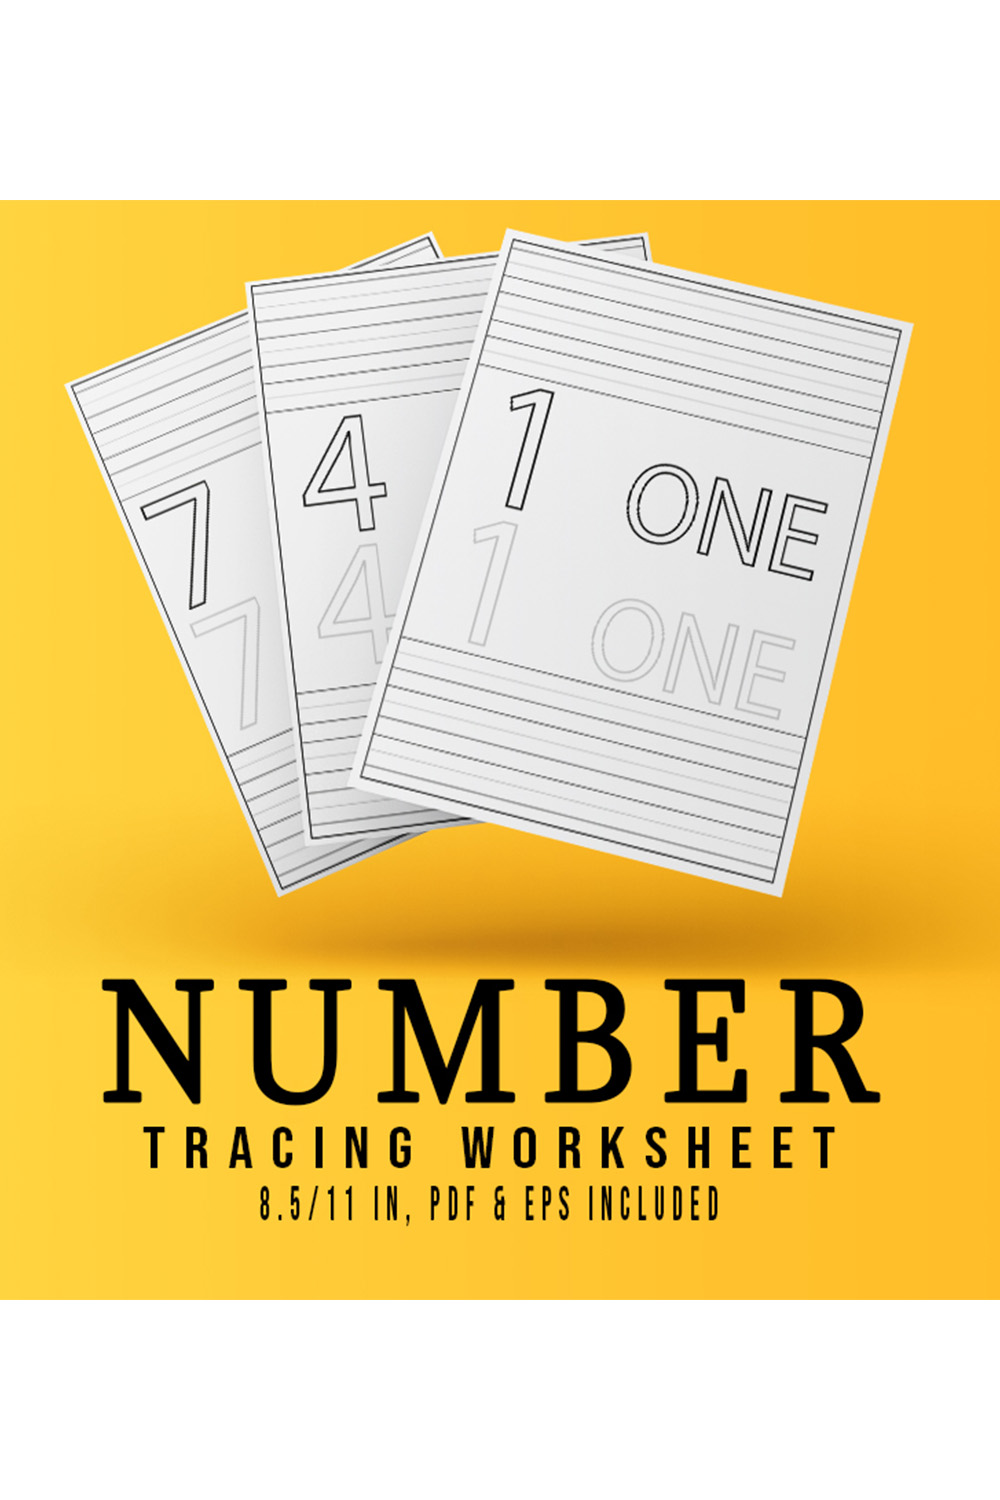 Numbers Tracing Worksheets Bundle pinterest image.